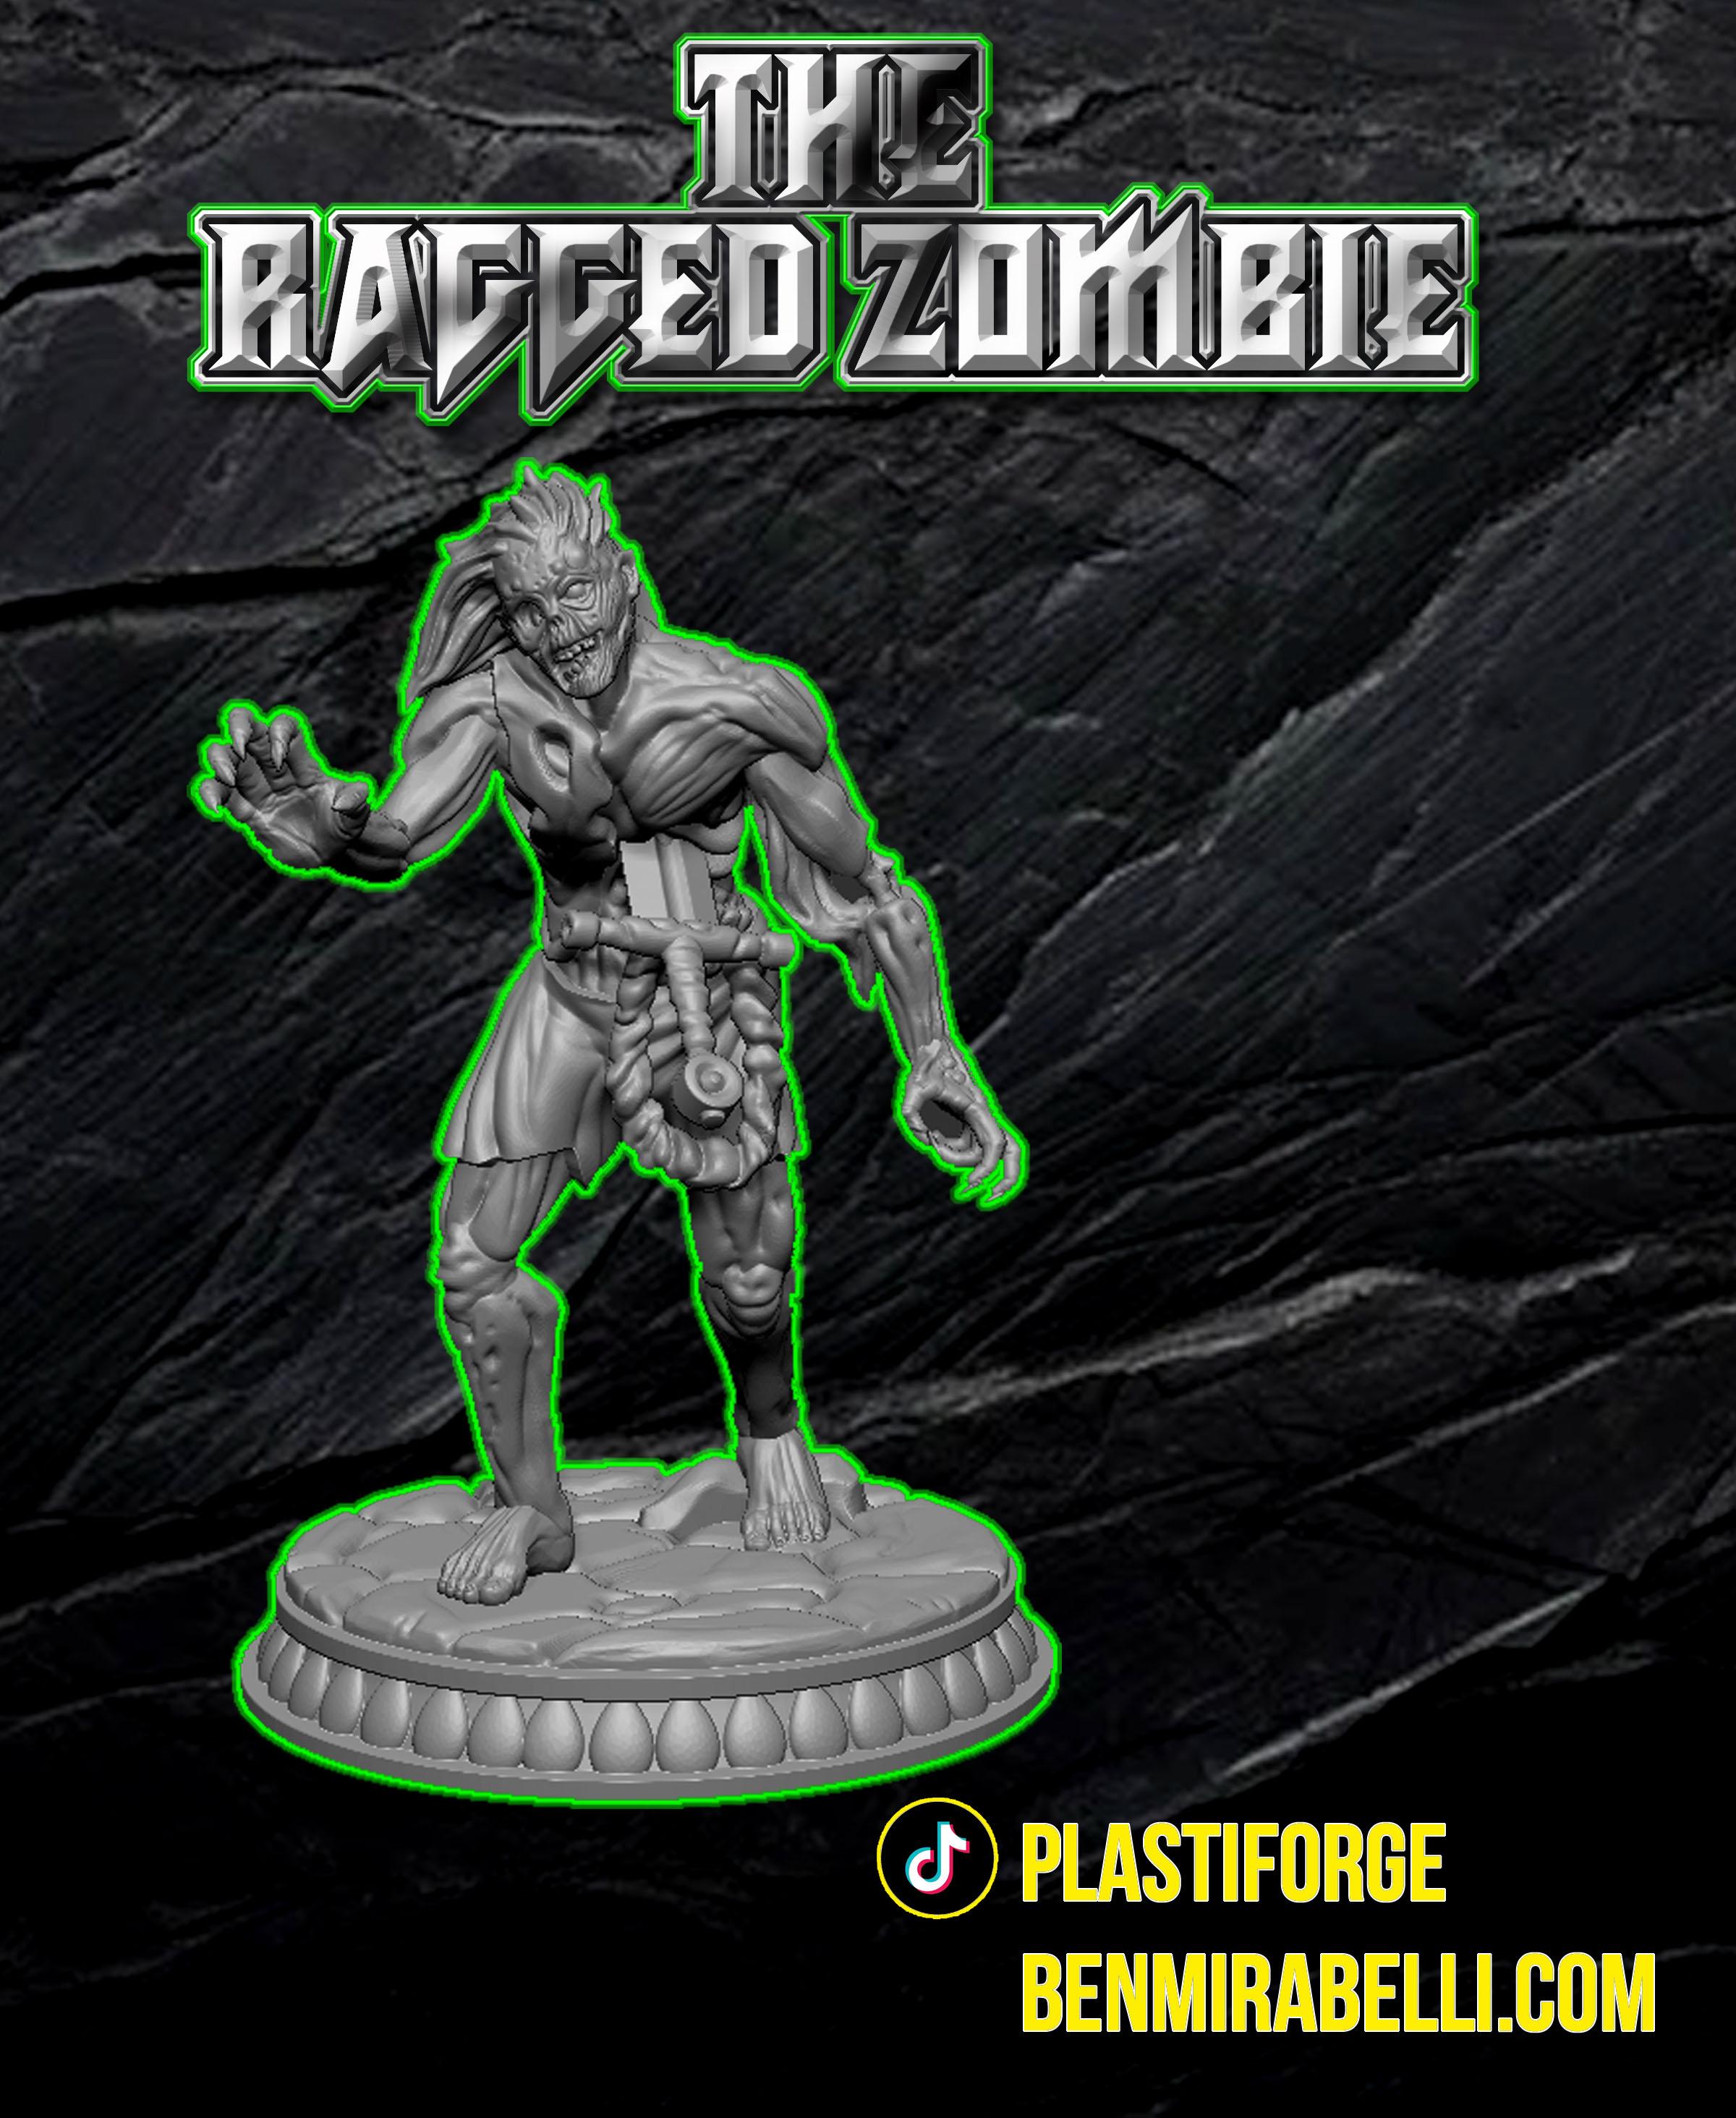 Ragged Zombie 3d model